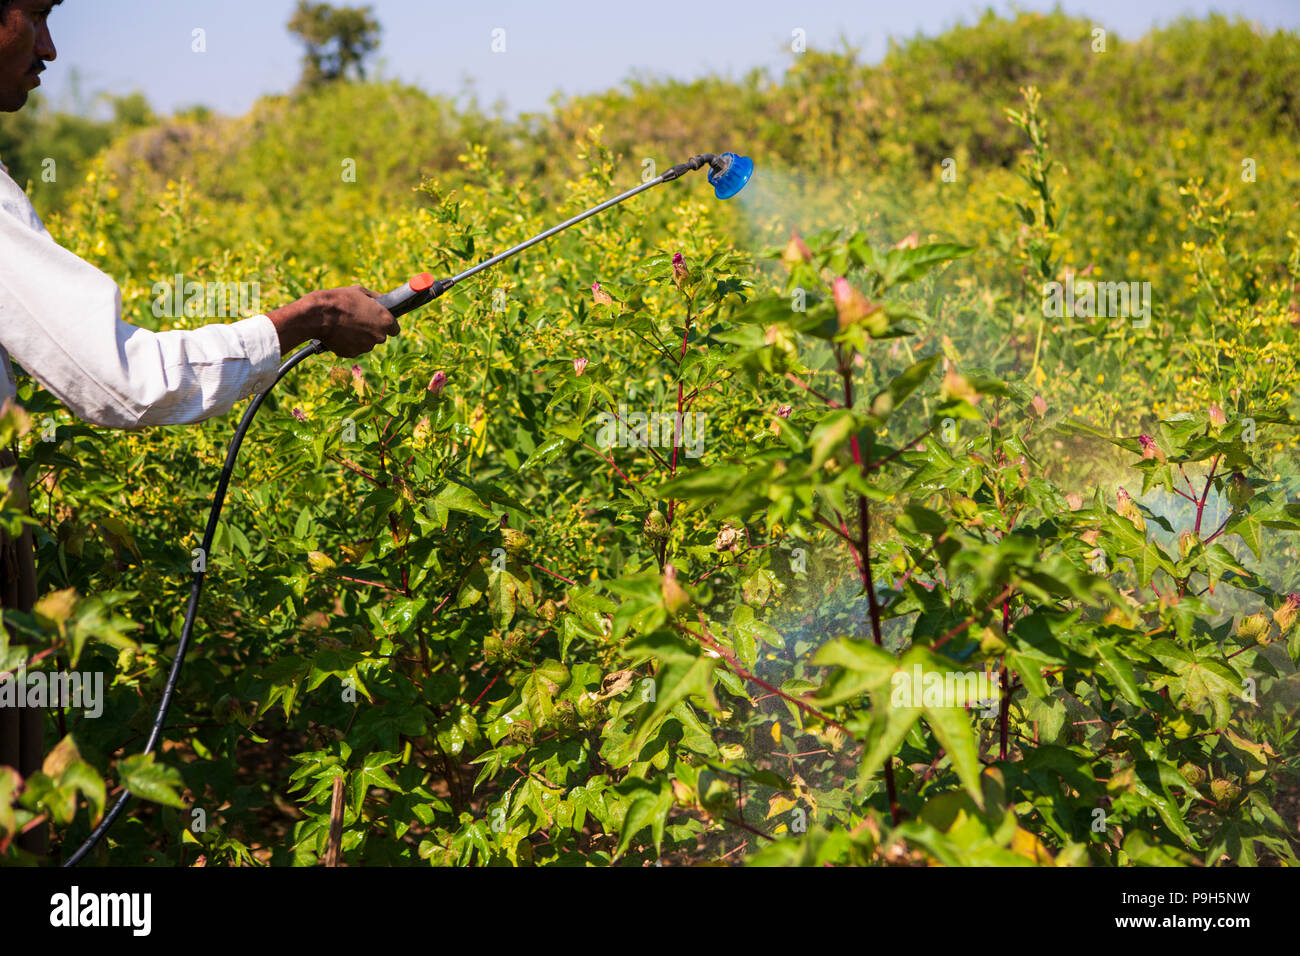 A farmer spraying organic pesticide on his cotton crop. Stock Photo